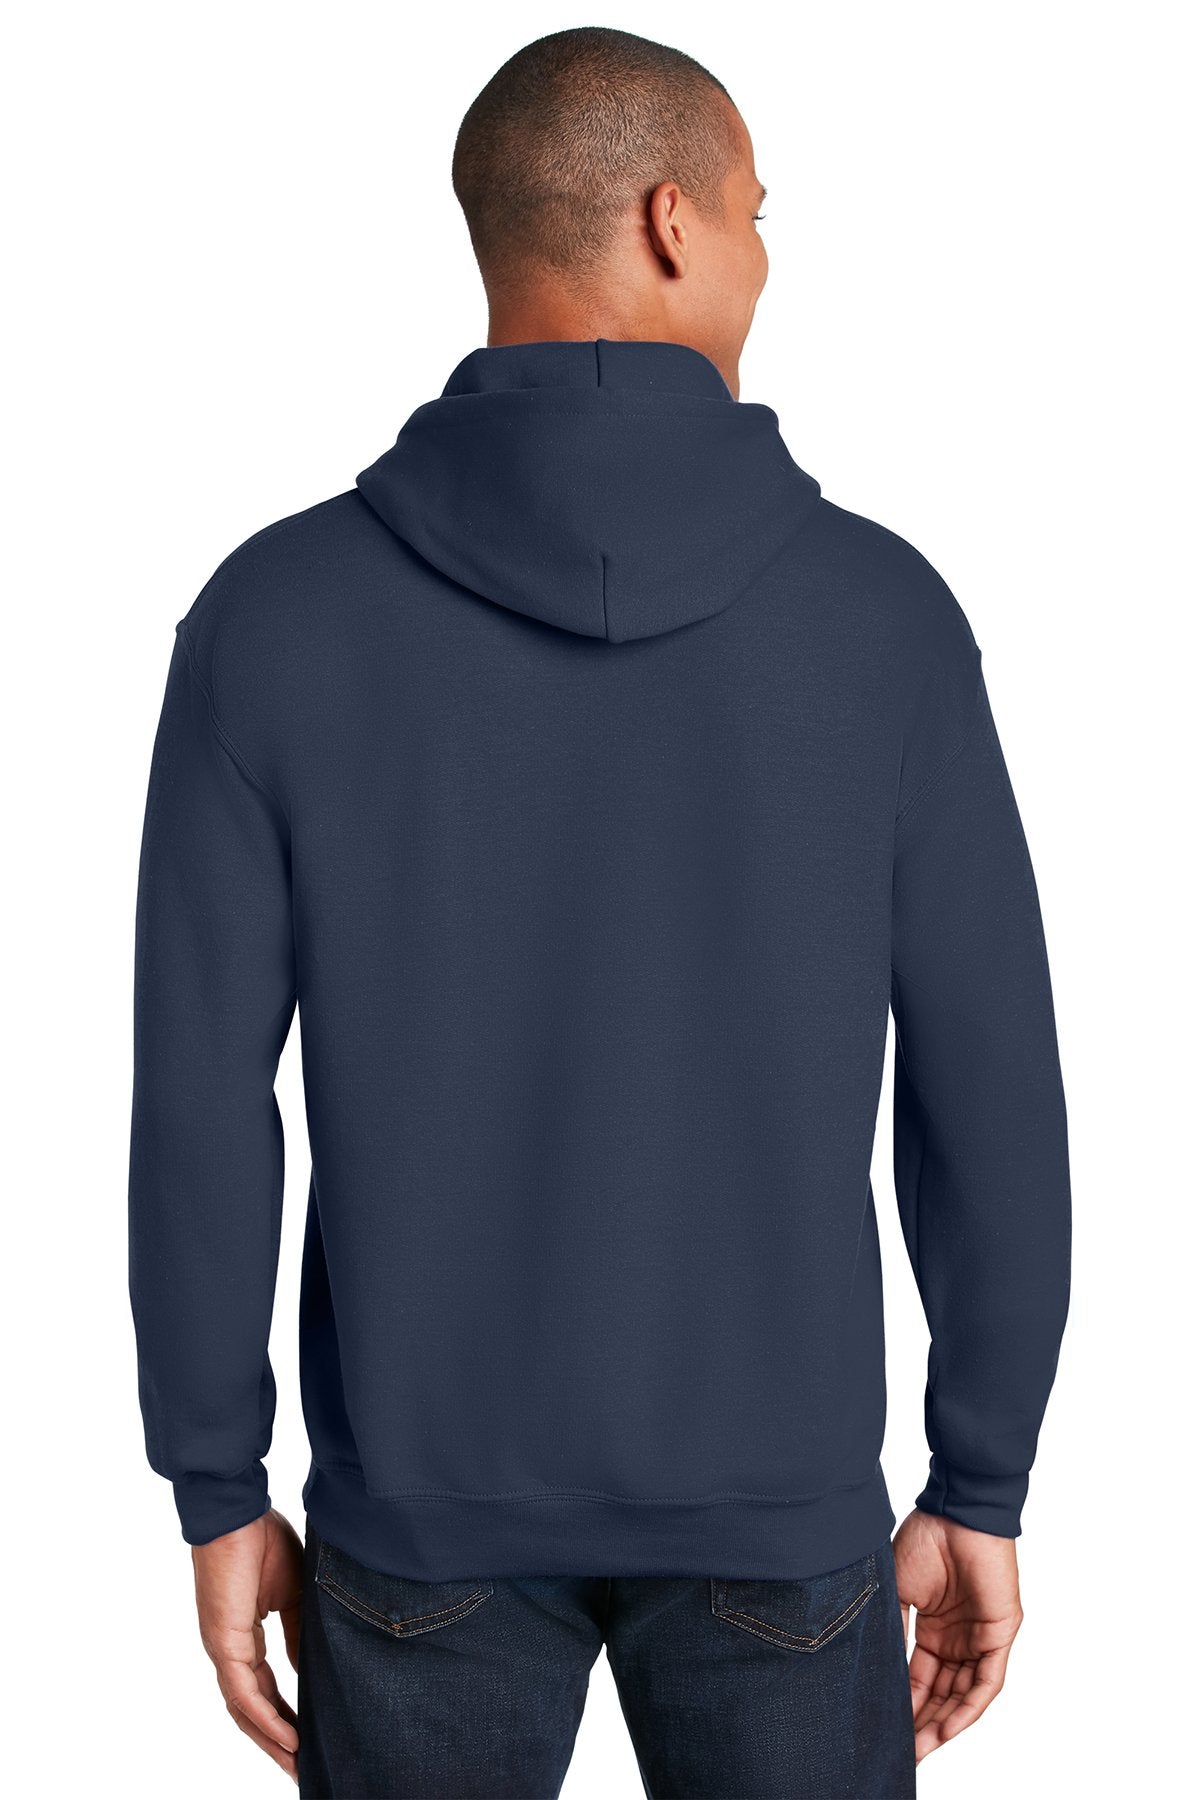 Gildan Heavy Blend Hooded Sweatshirt Navy